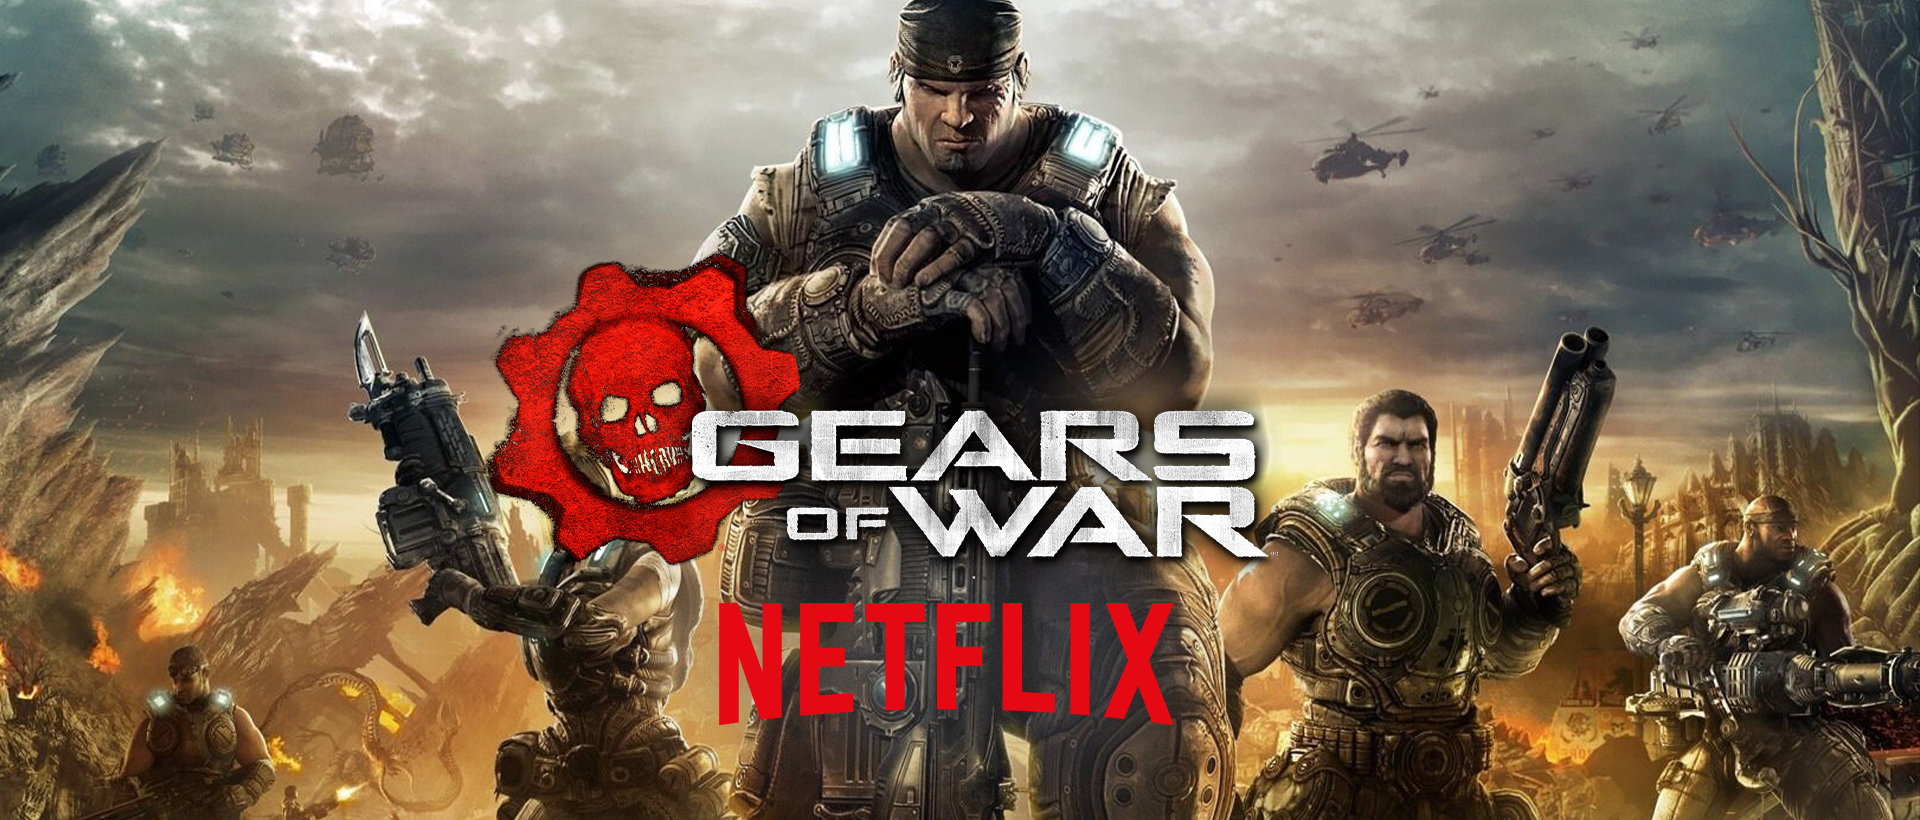 gears of war netflix movie banner